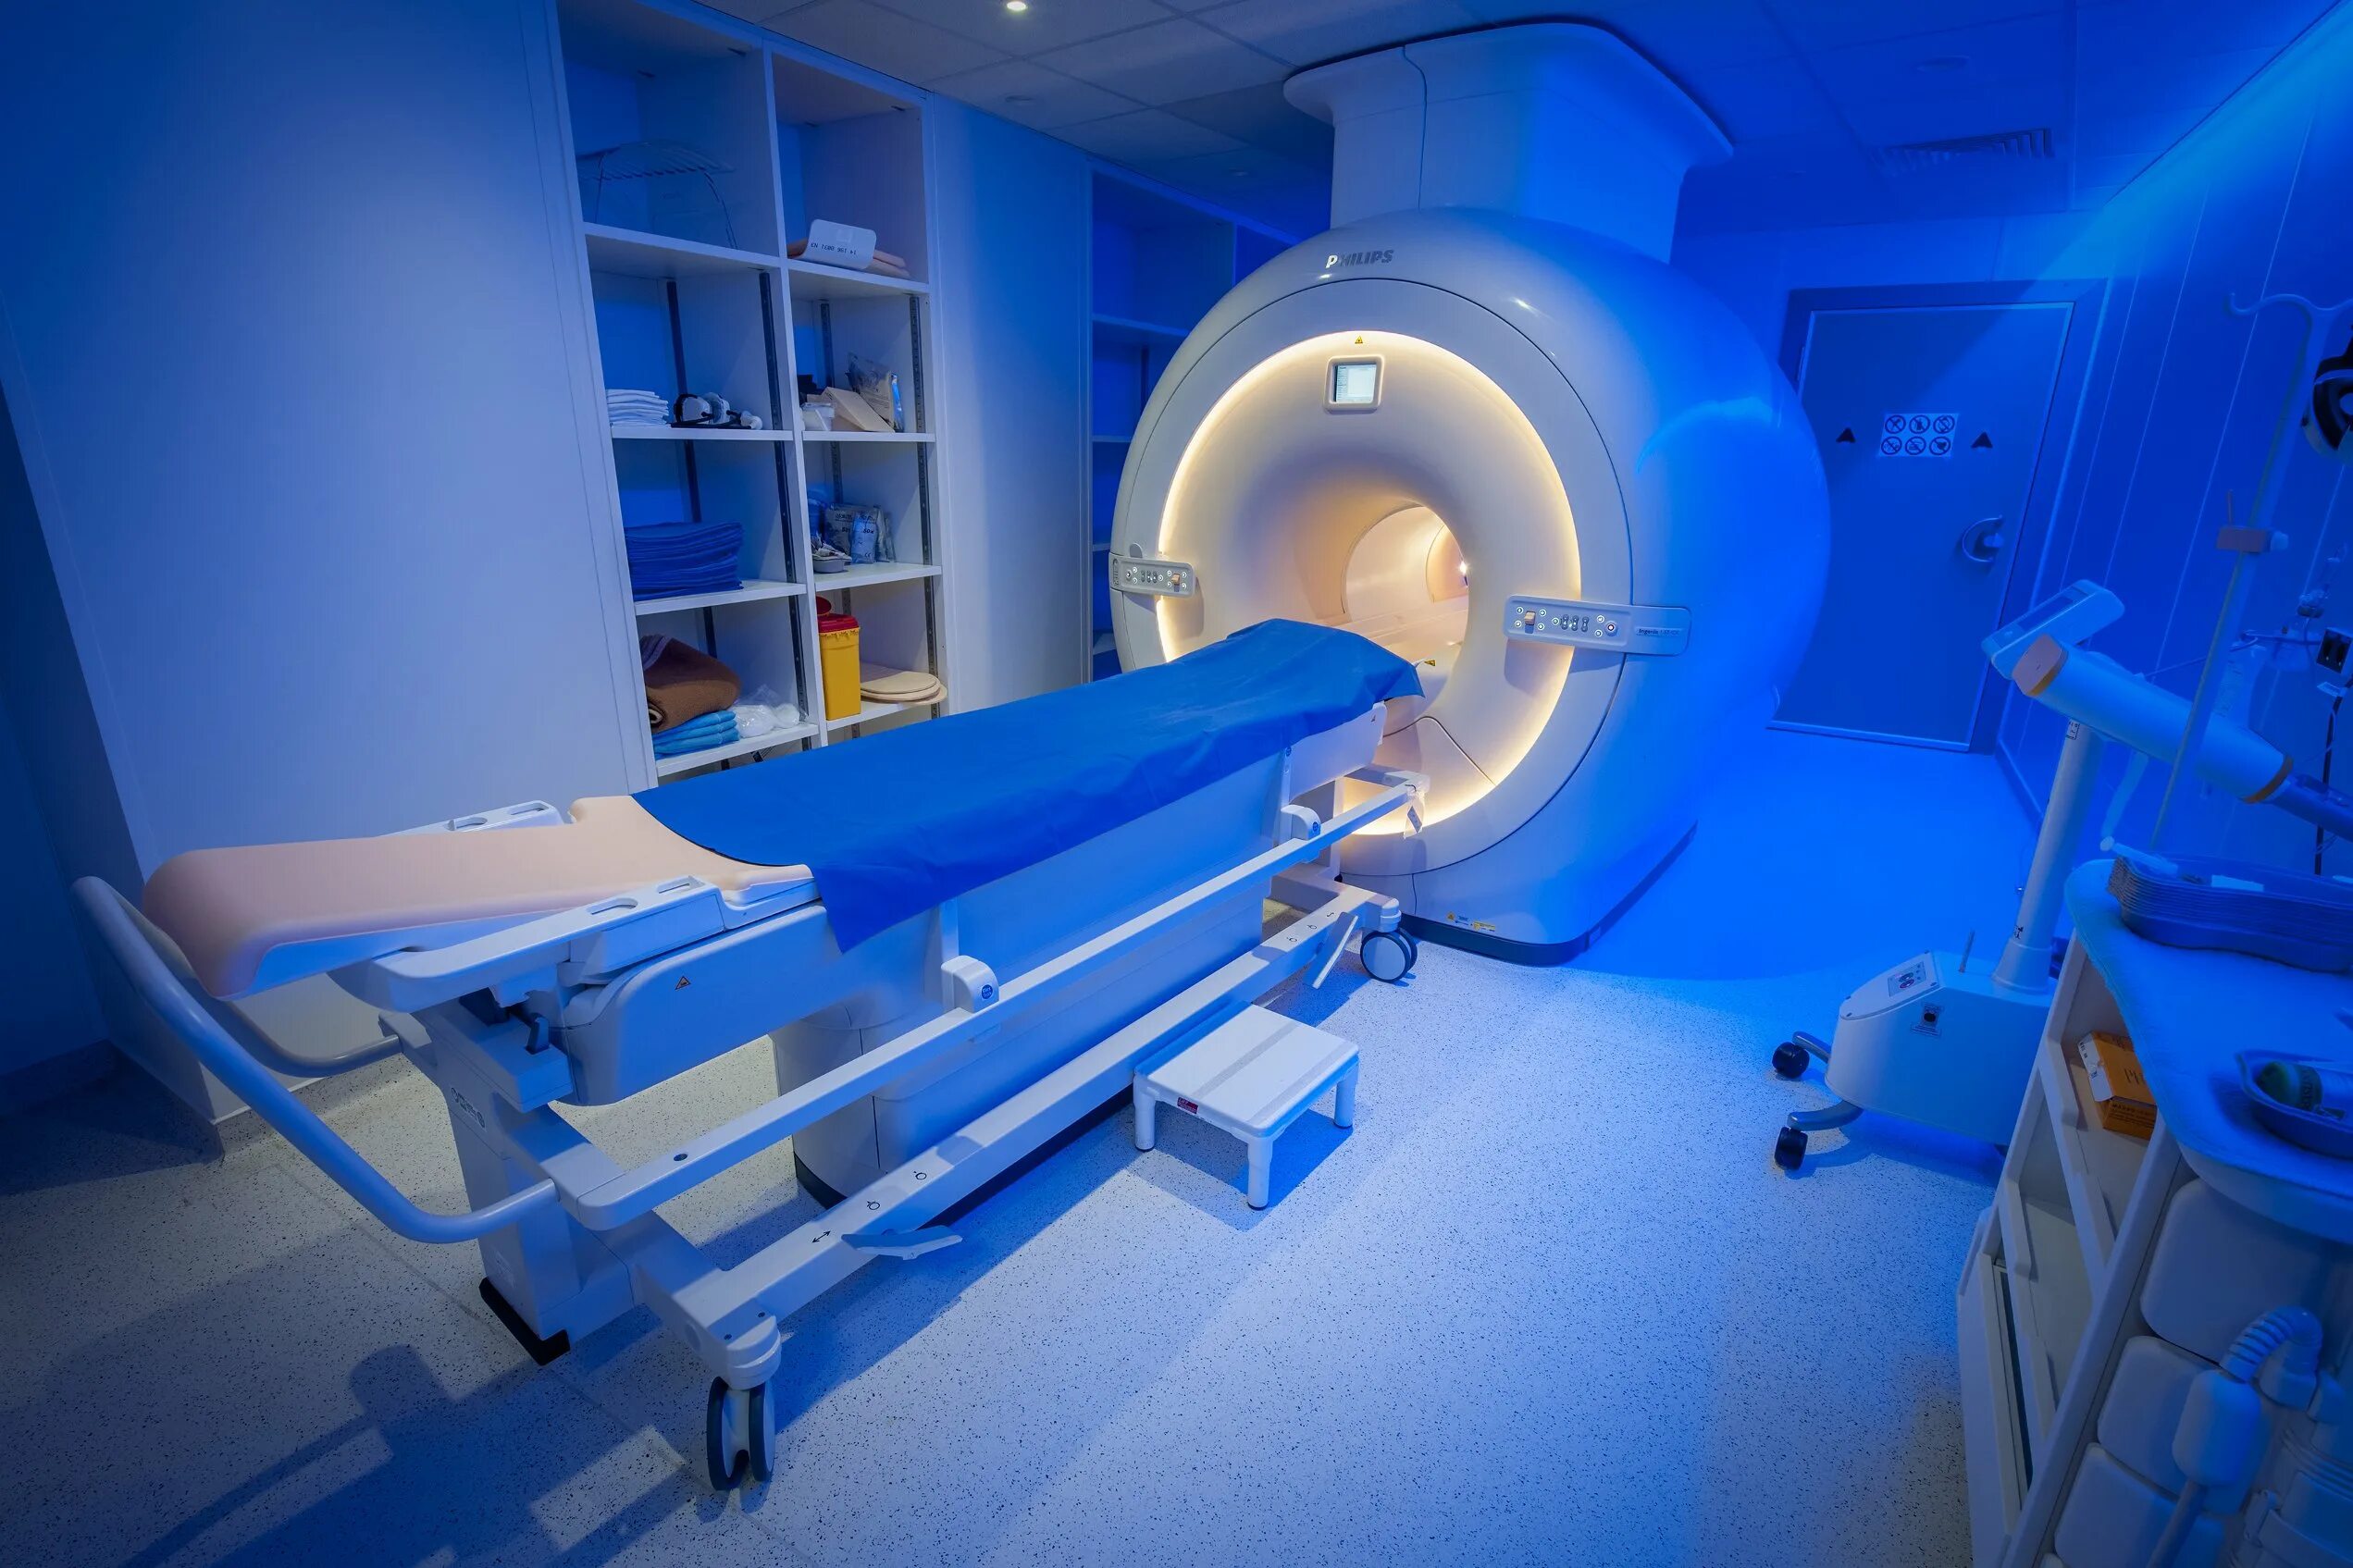 Mrt. Магниторезонансная томография (мрт). Аппарат для Магнито-резонансной томографии. Магнито-резонансный томограф. Мрт Университетская клиника.